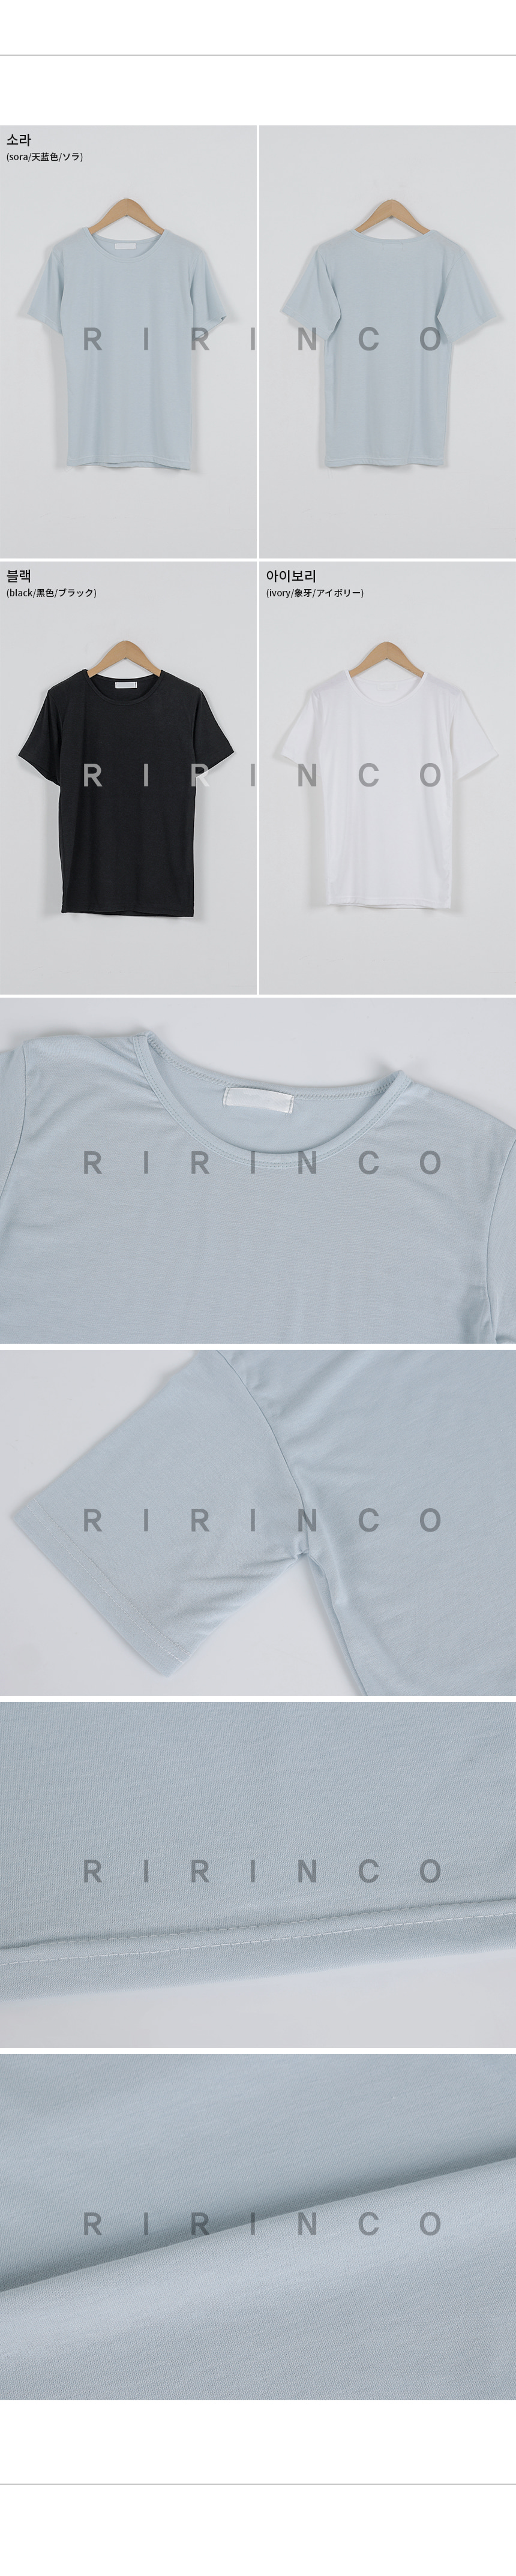 RIRINCO スパンデックスラウンドネック半袖Tシャツ